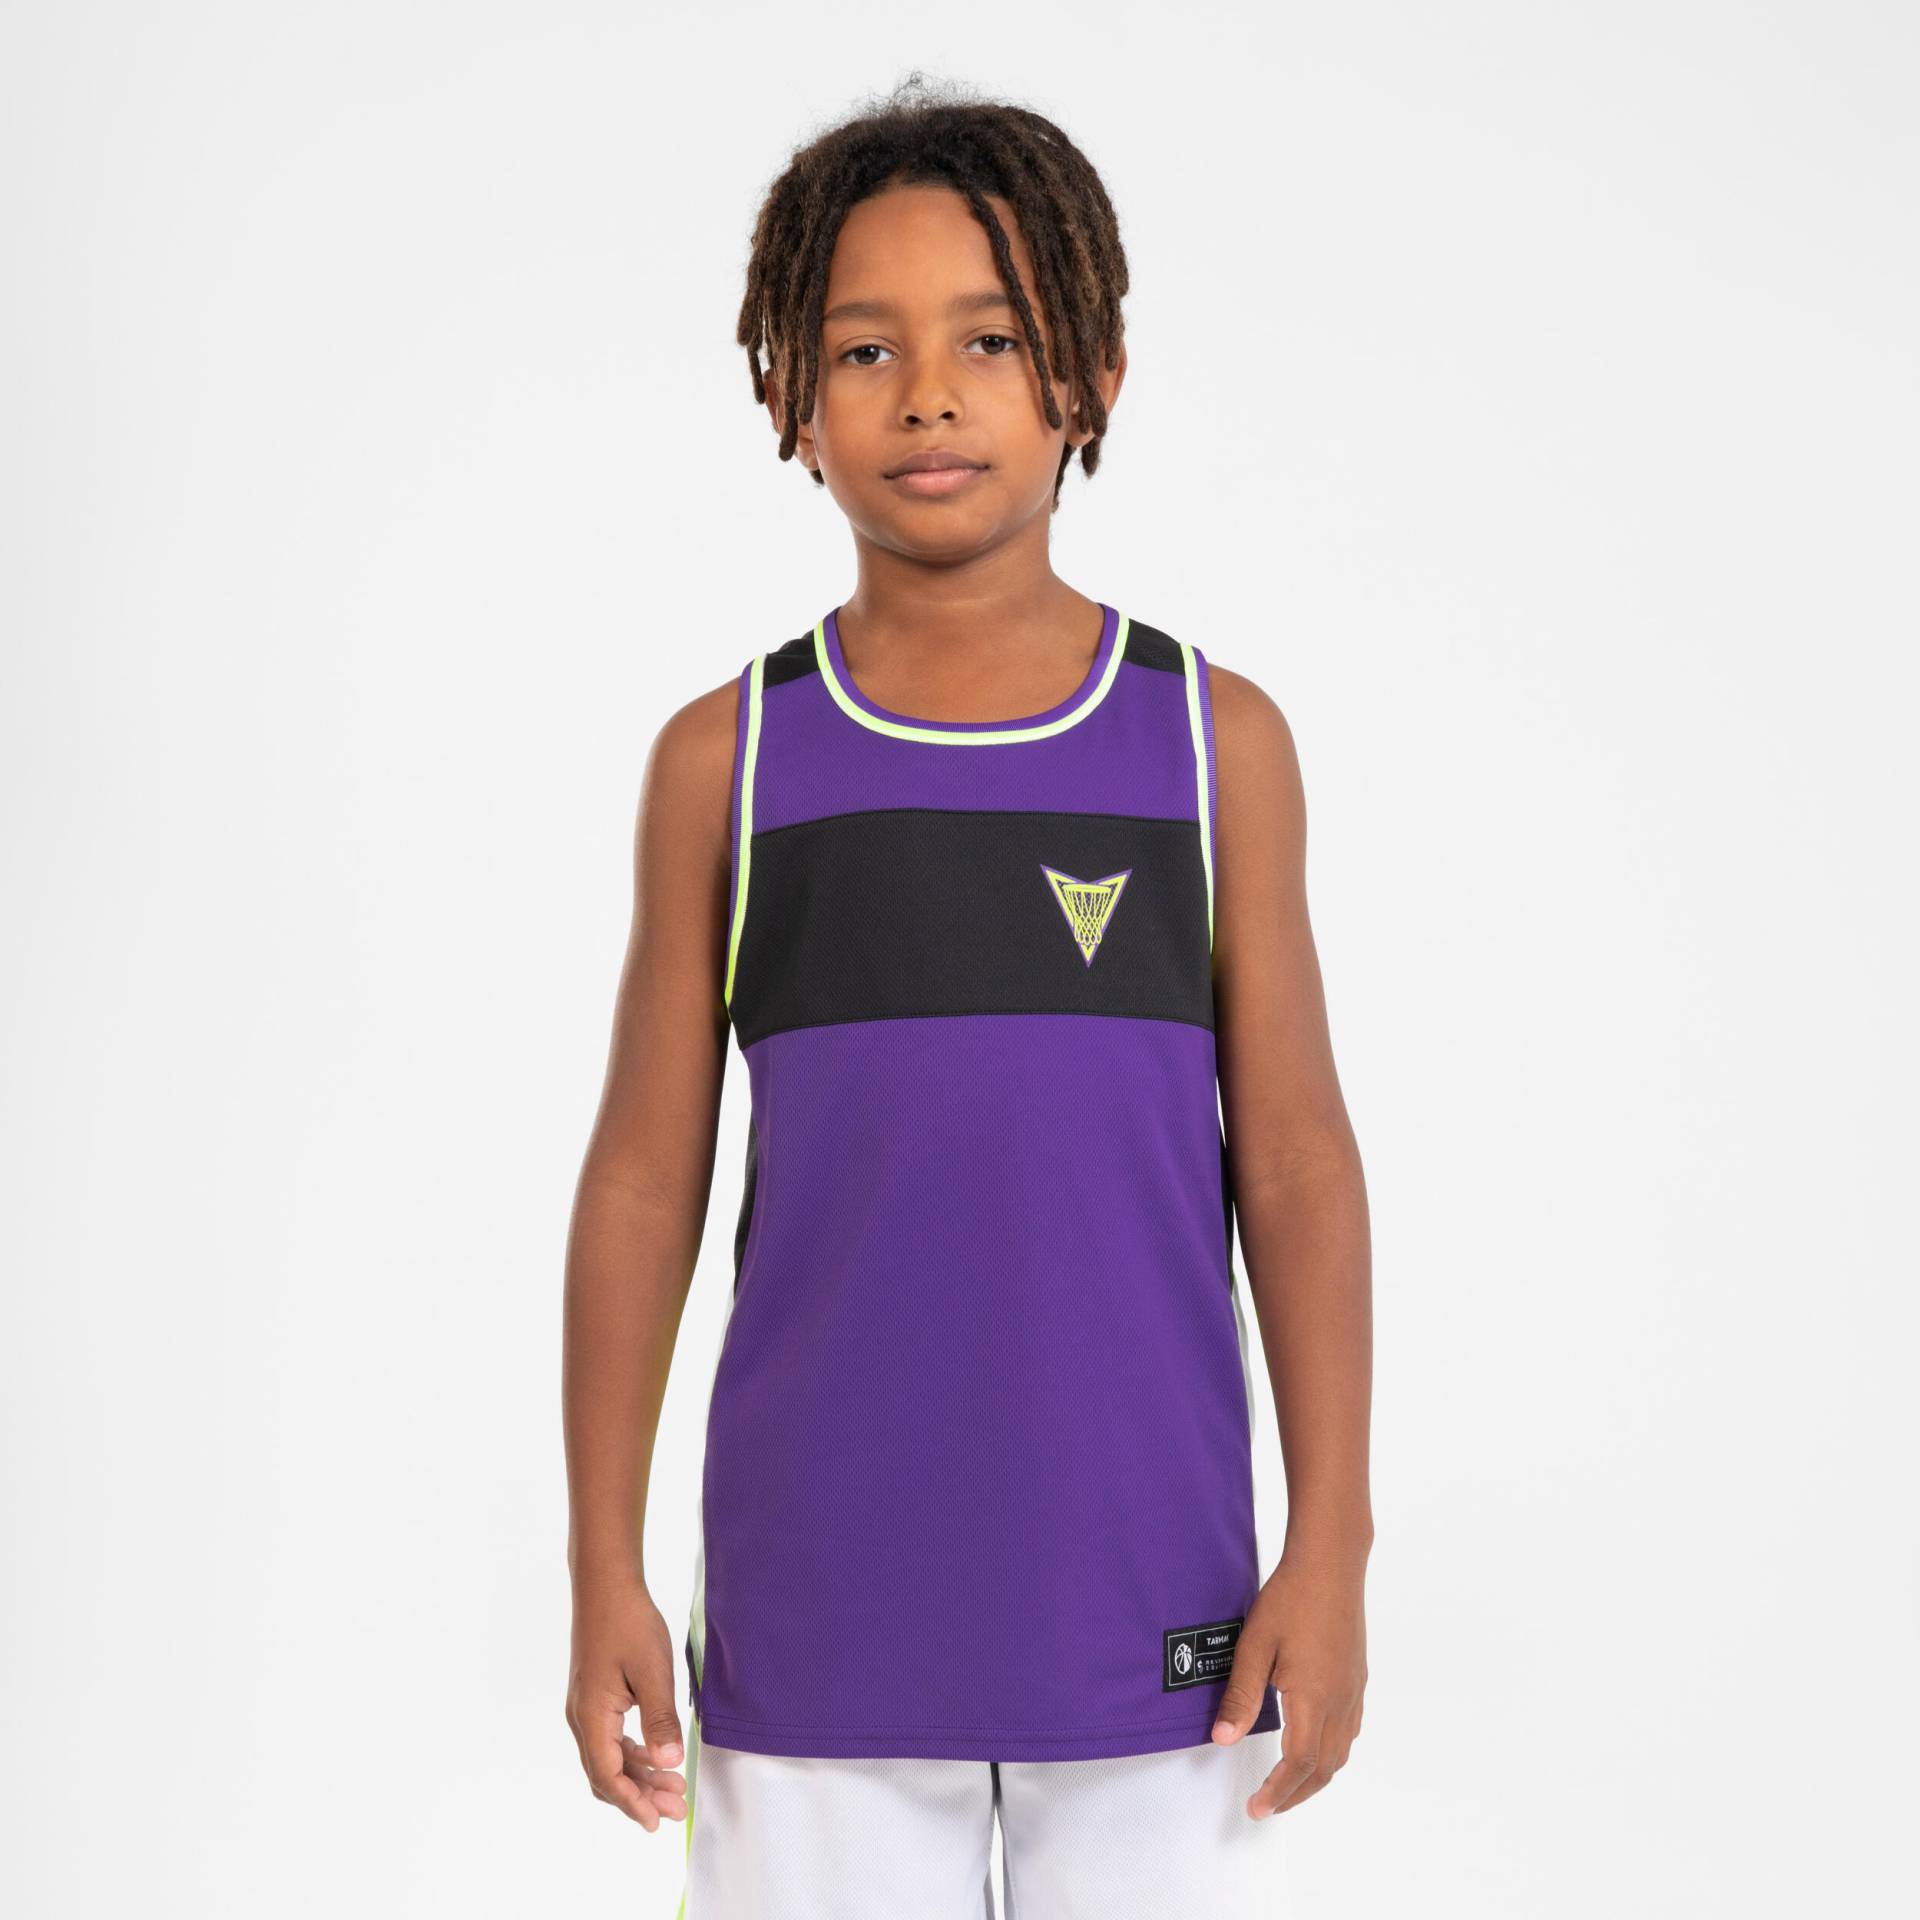 Kinder Basketball Trikot - T500R weiss/violett von TARMAK